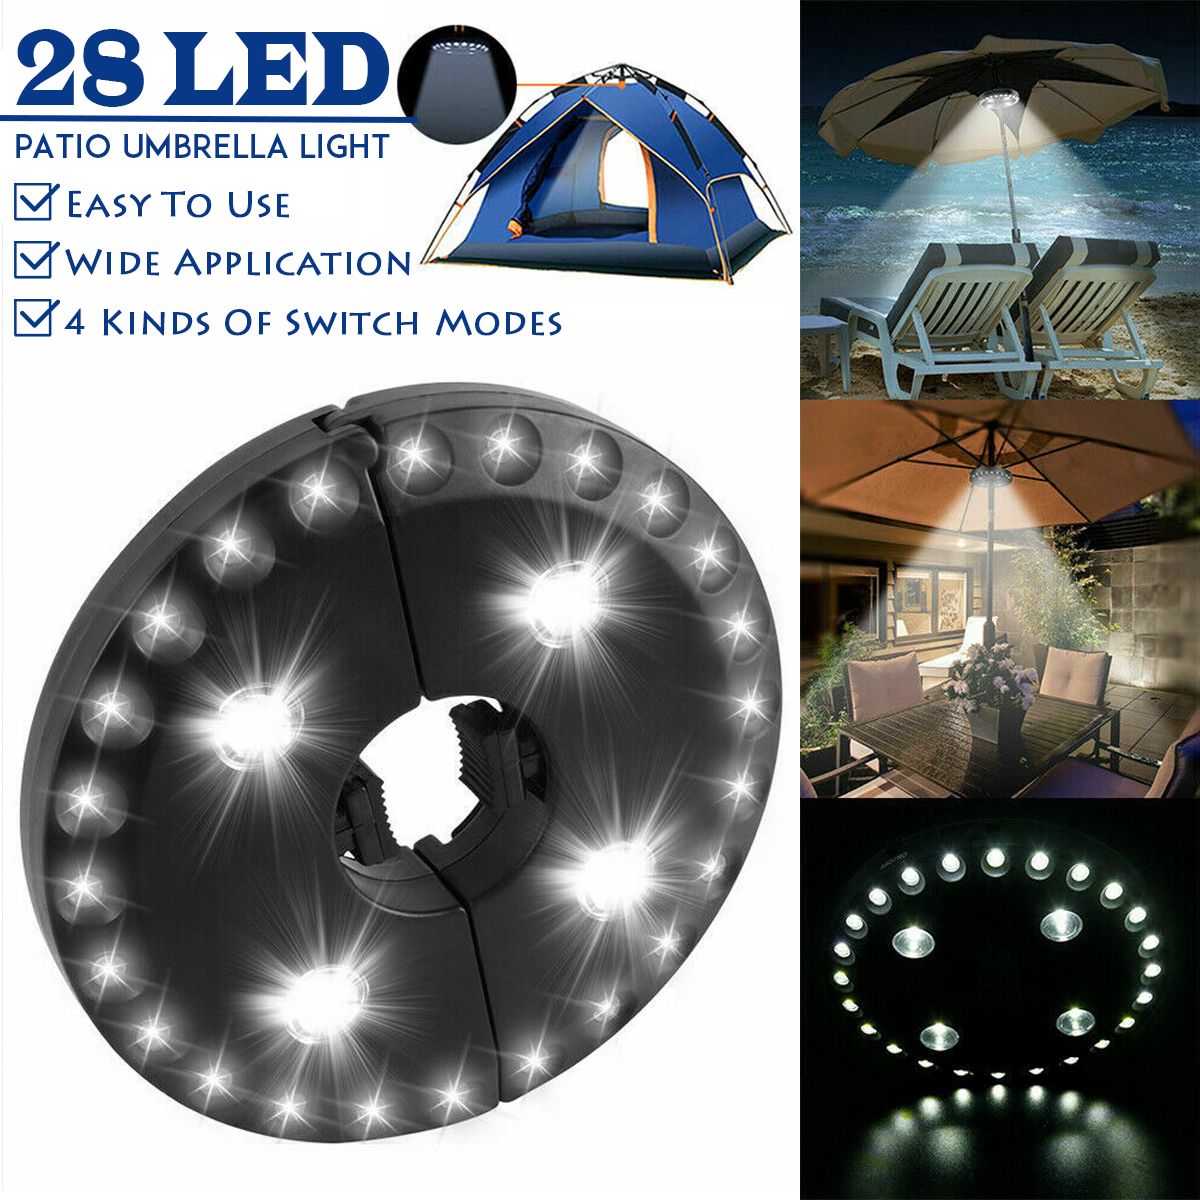 28-LED-Parasol-Patio-Umbrella-Light-3-Brightness-Mode-Outdoor-Camping-Tent-Light-1692106